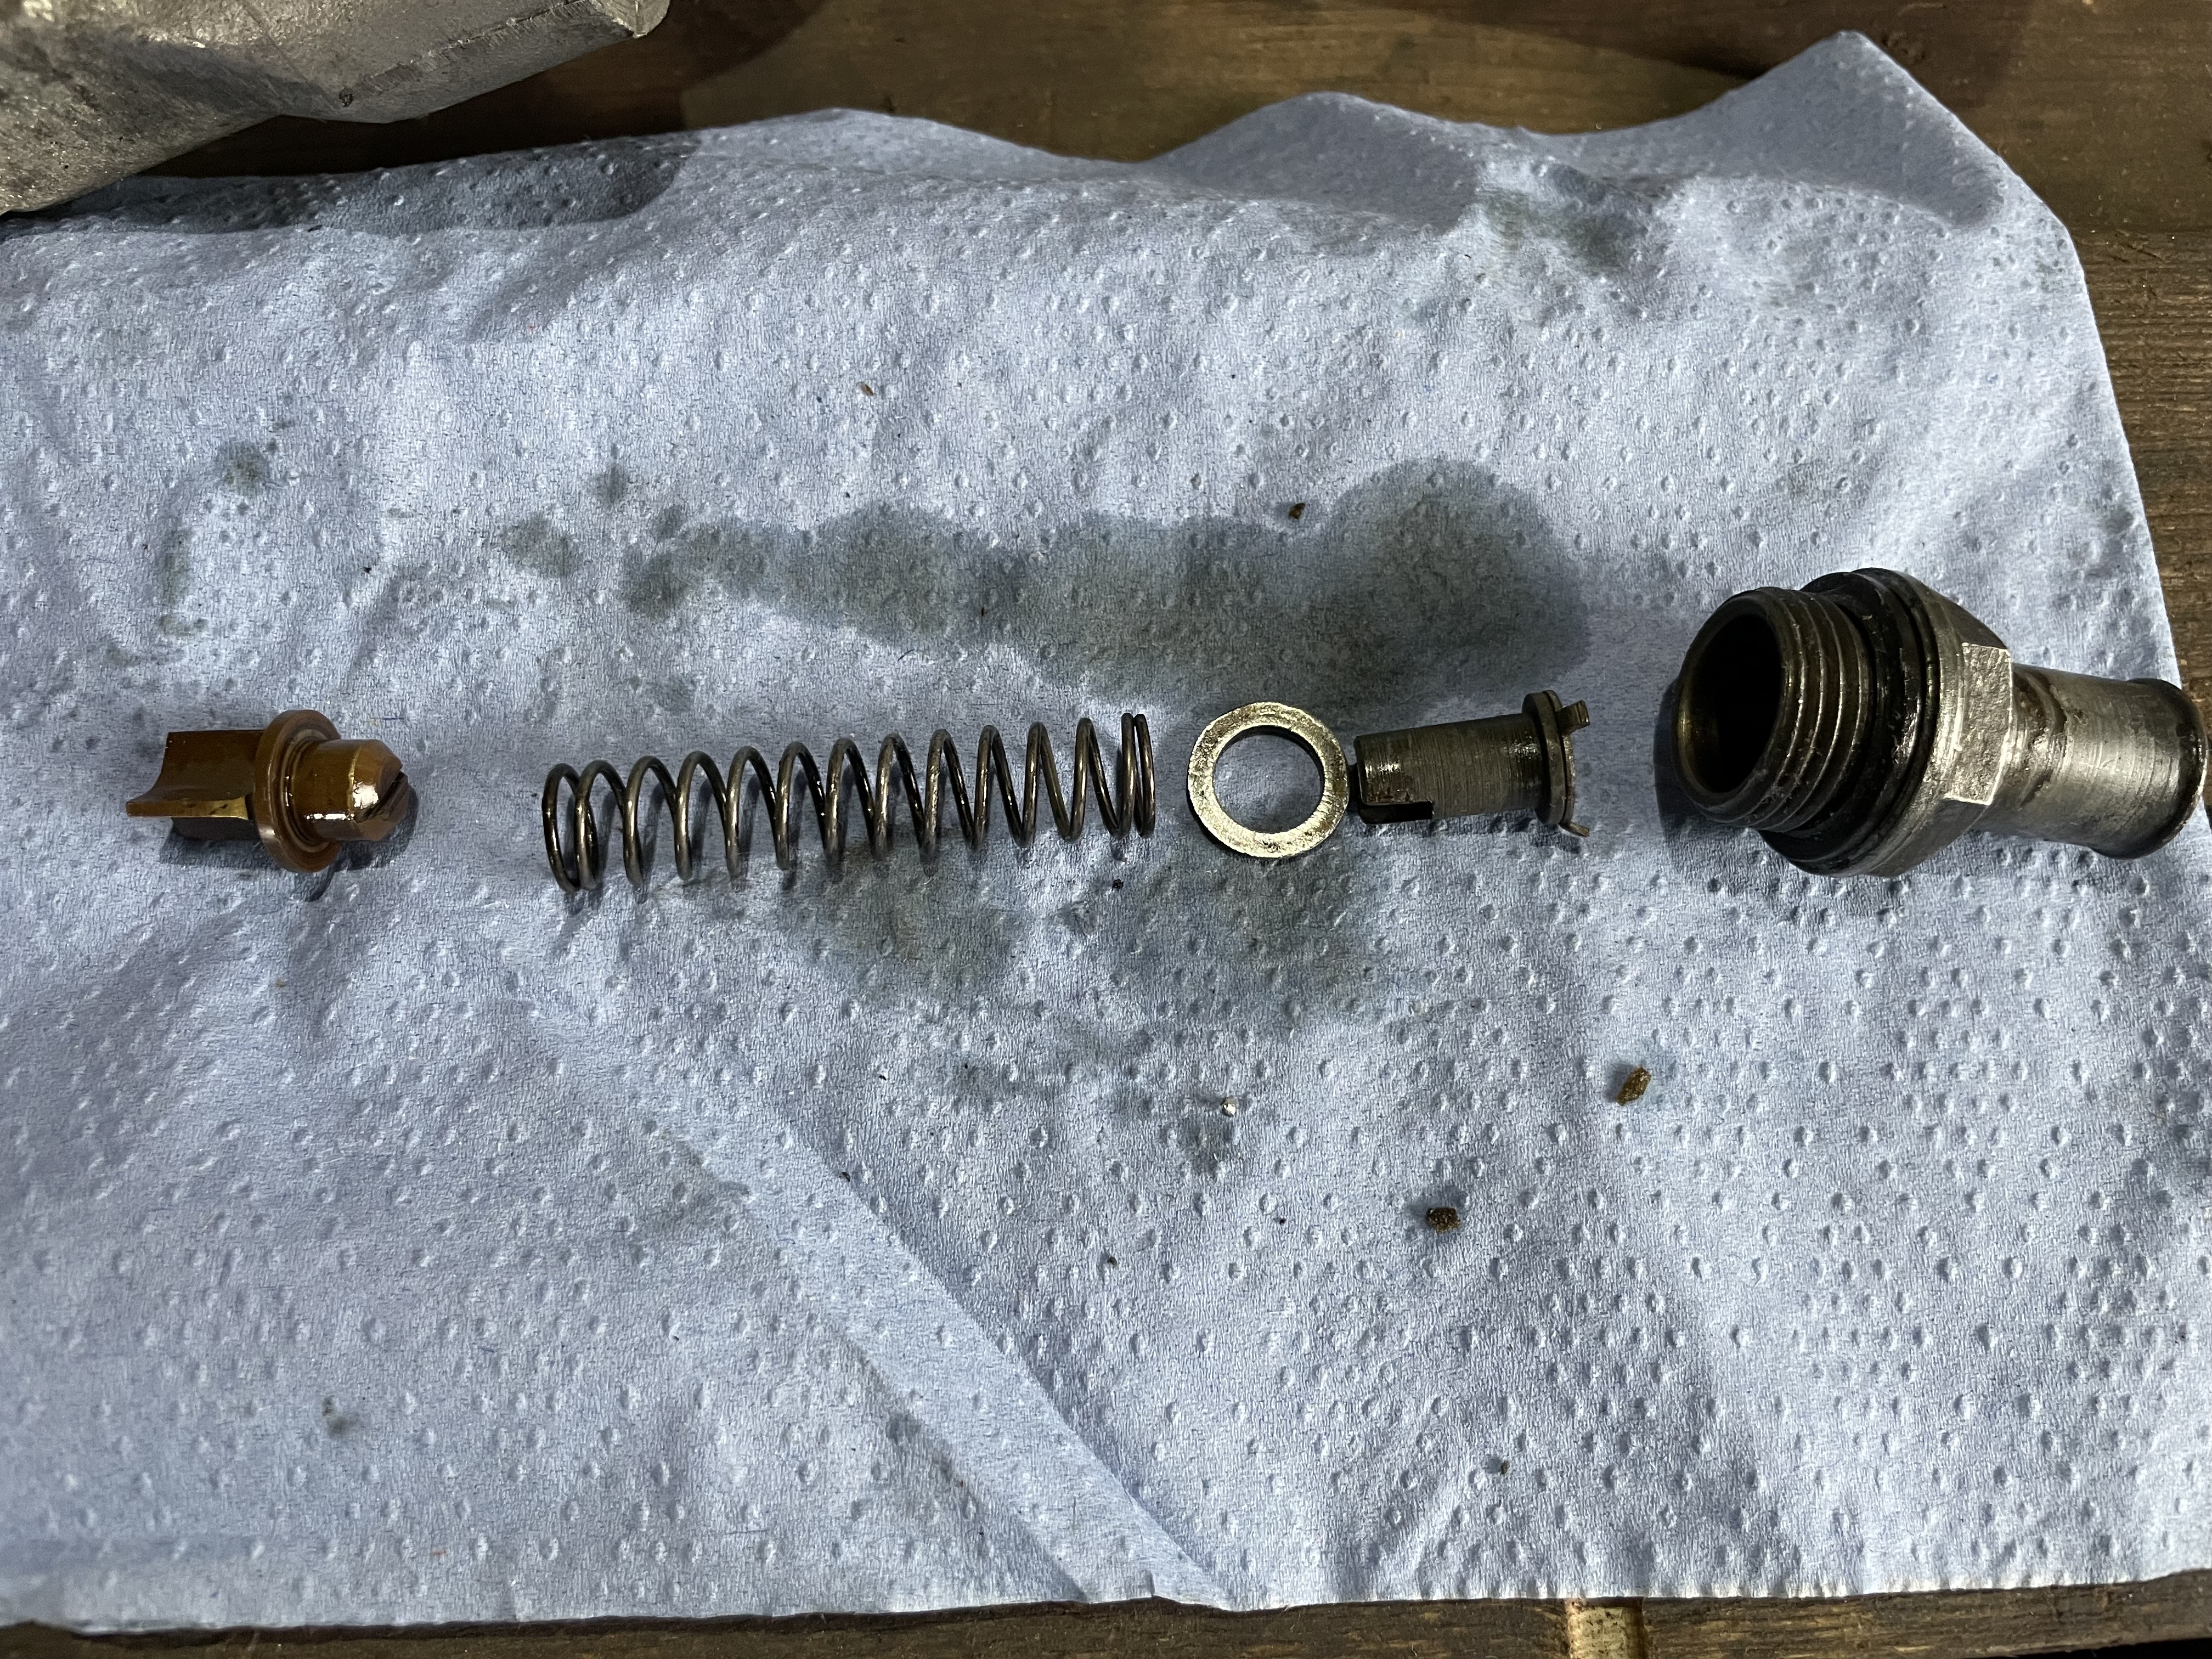 Oil pressure relief valve stripped